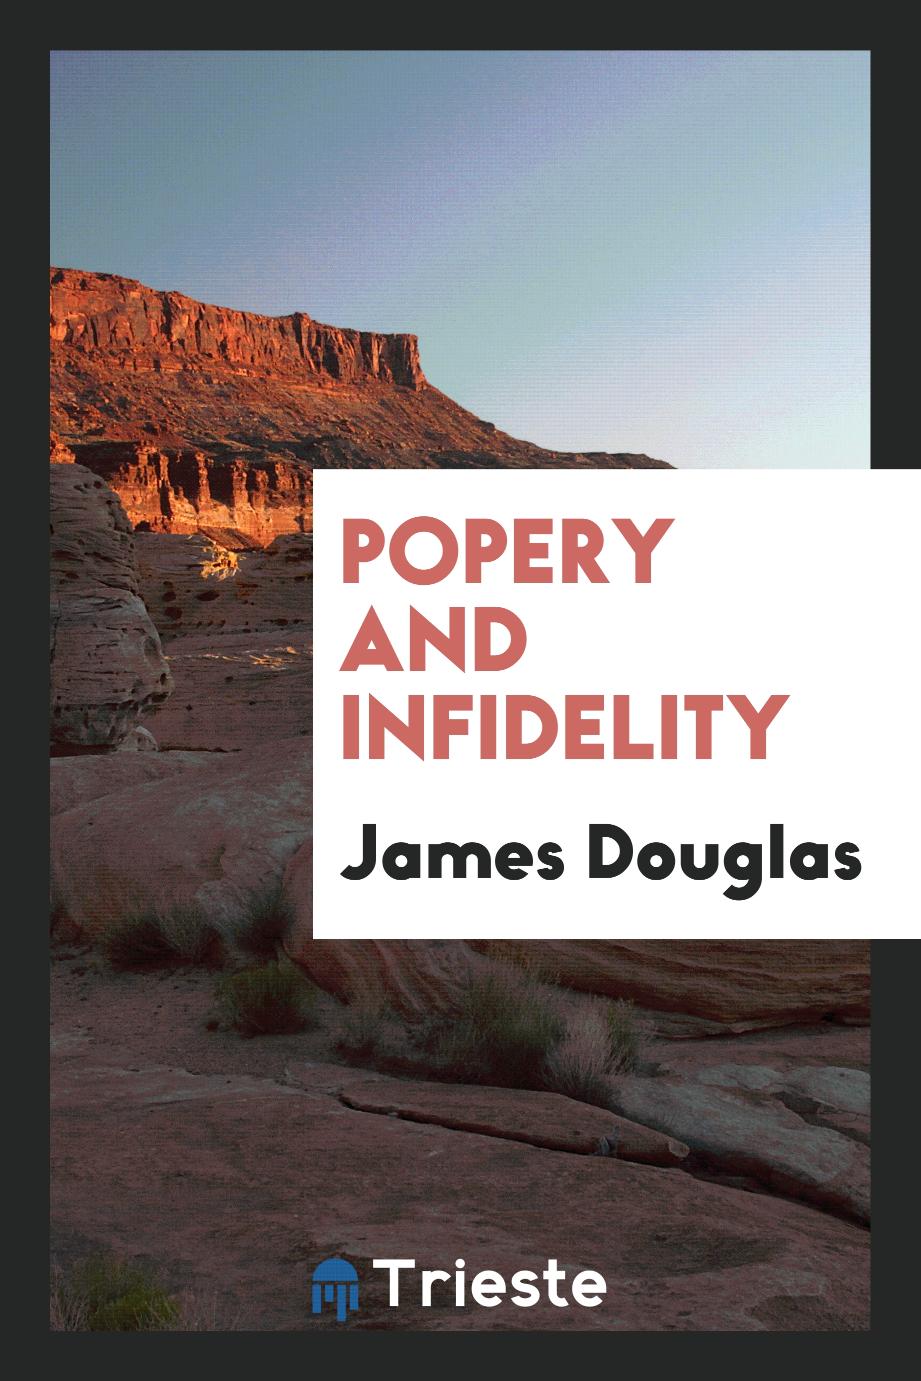 Popery and infidelity